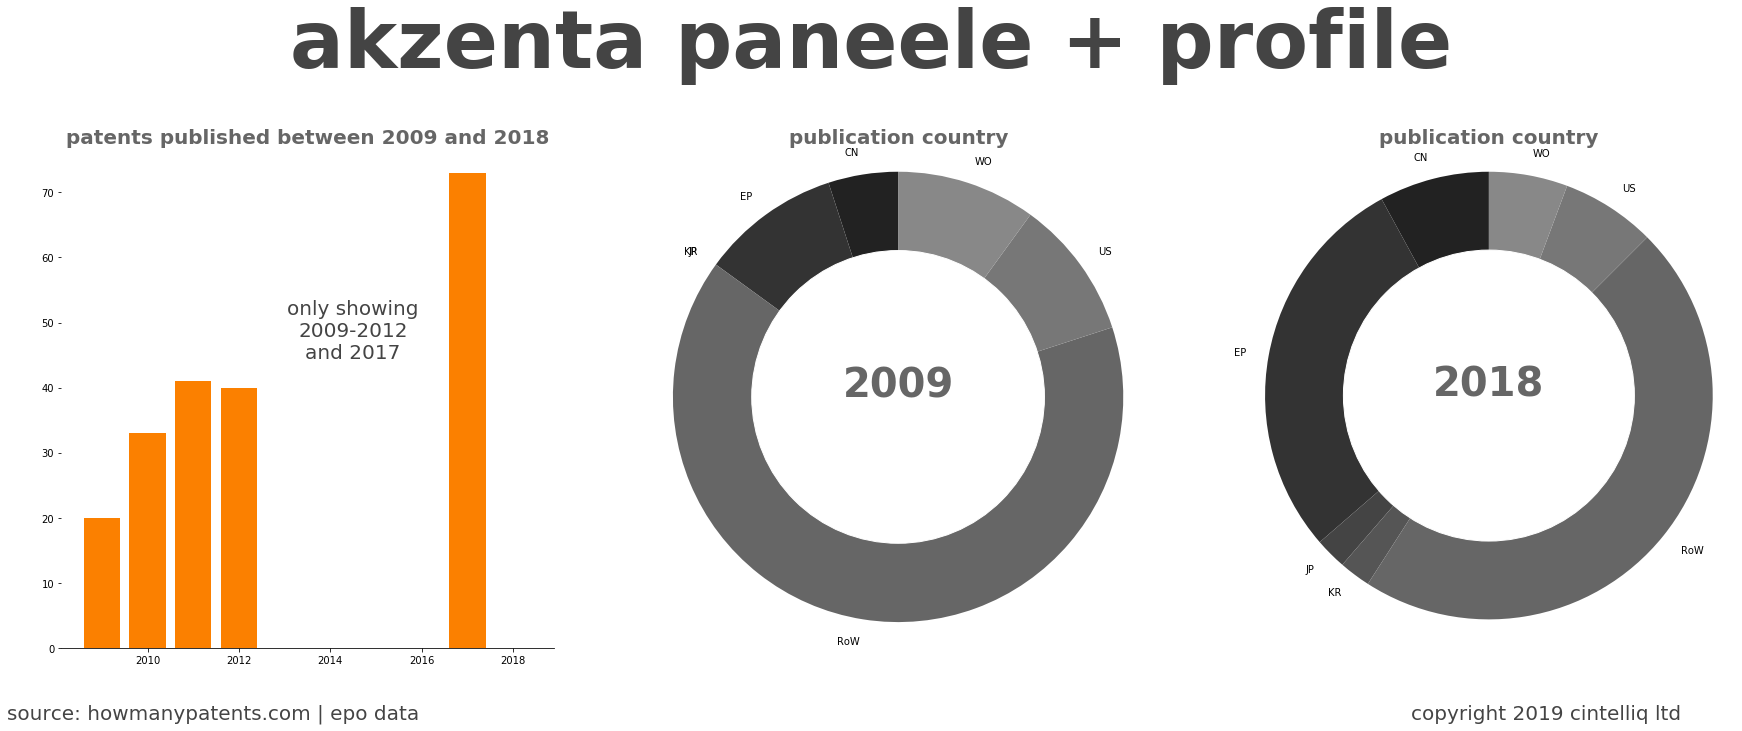 summary of patents for Akzenta Paneele + Profile